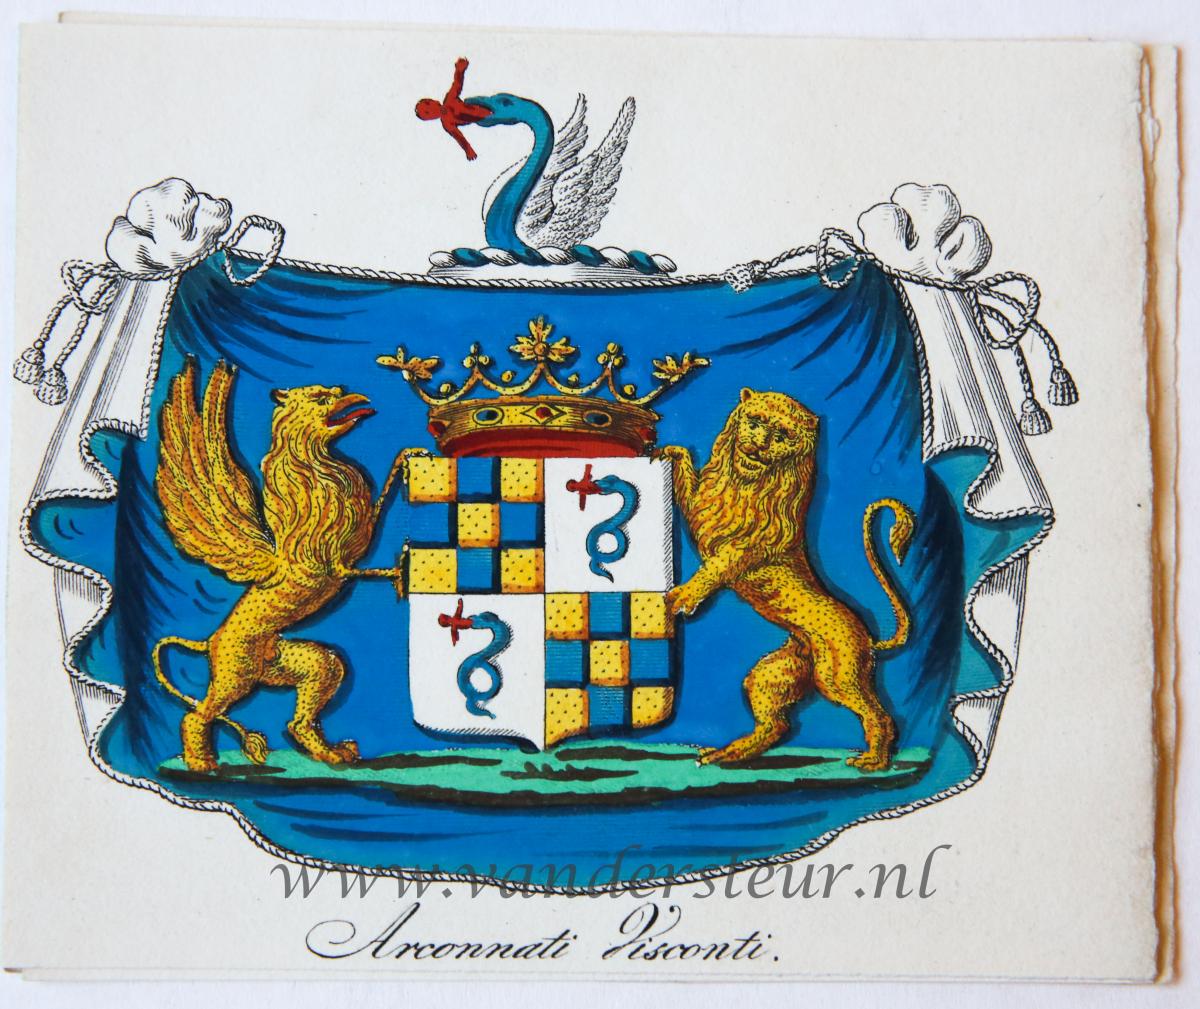 Wapenkaart/Coat of Arms: Arconnati Visconti